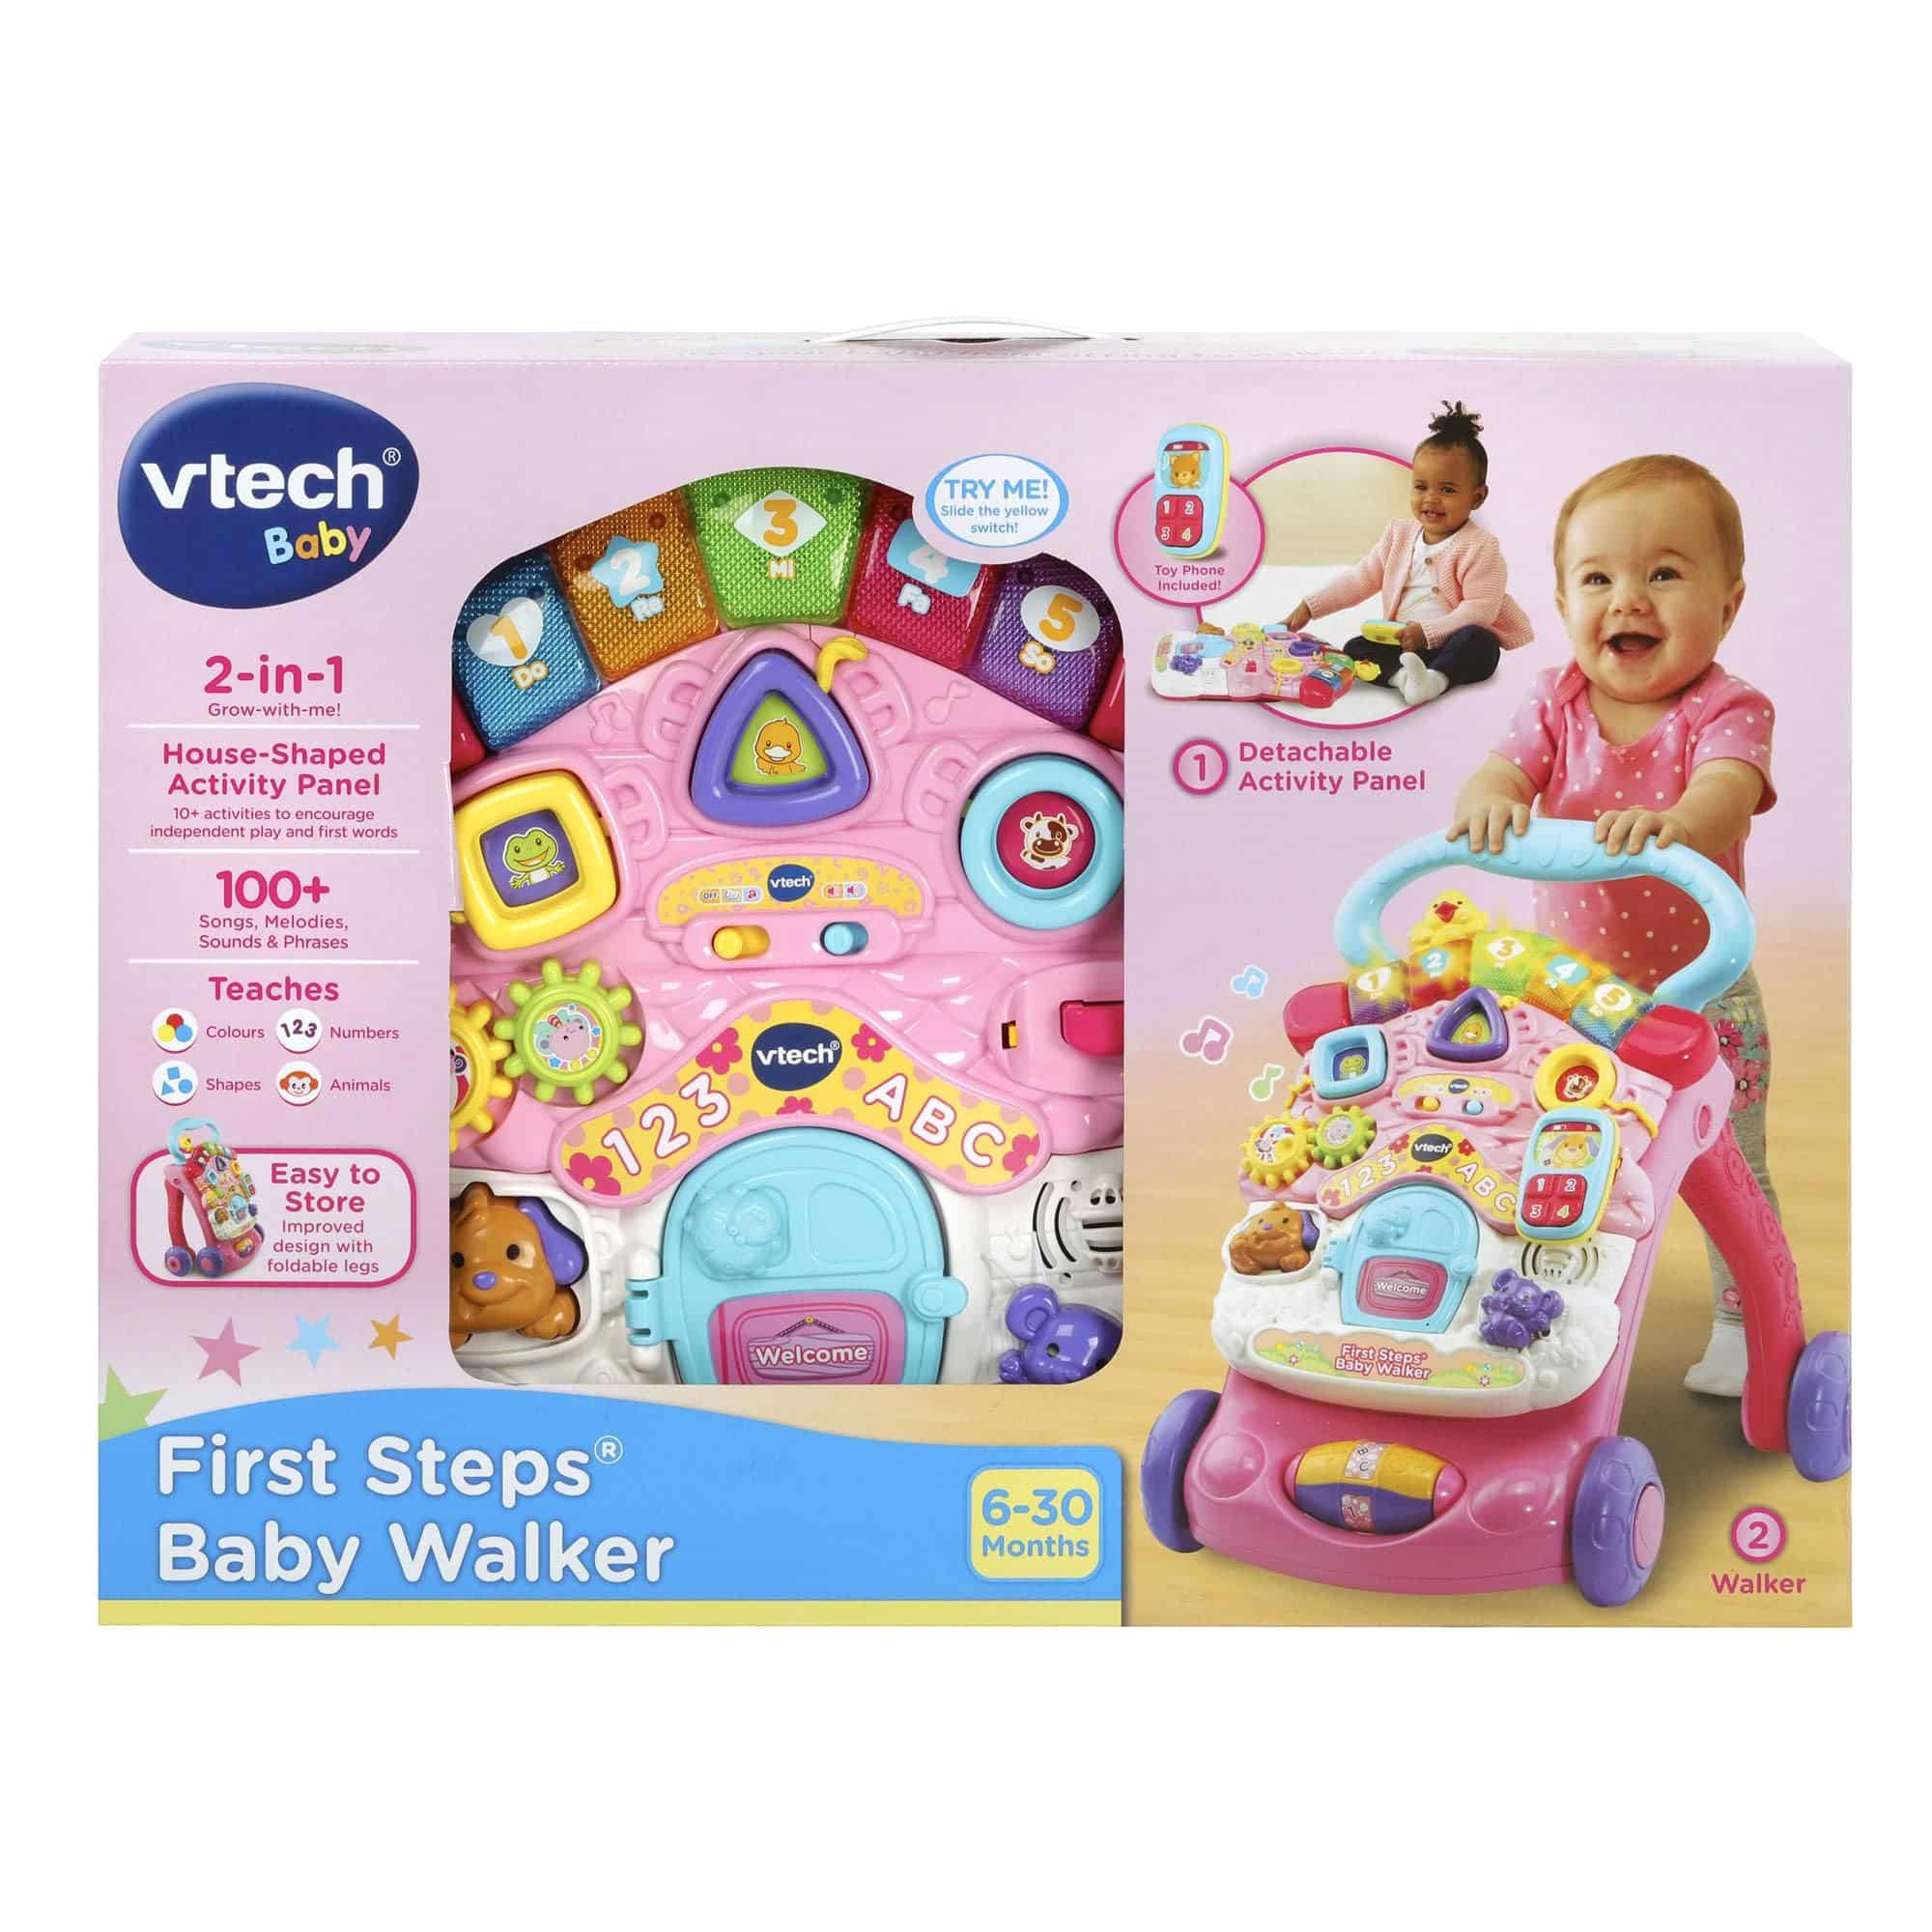 Vtech Baby - First Steps Baby Walker - Pink